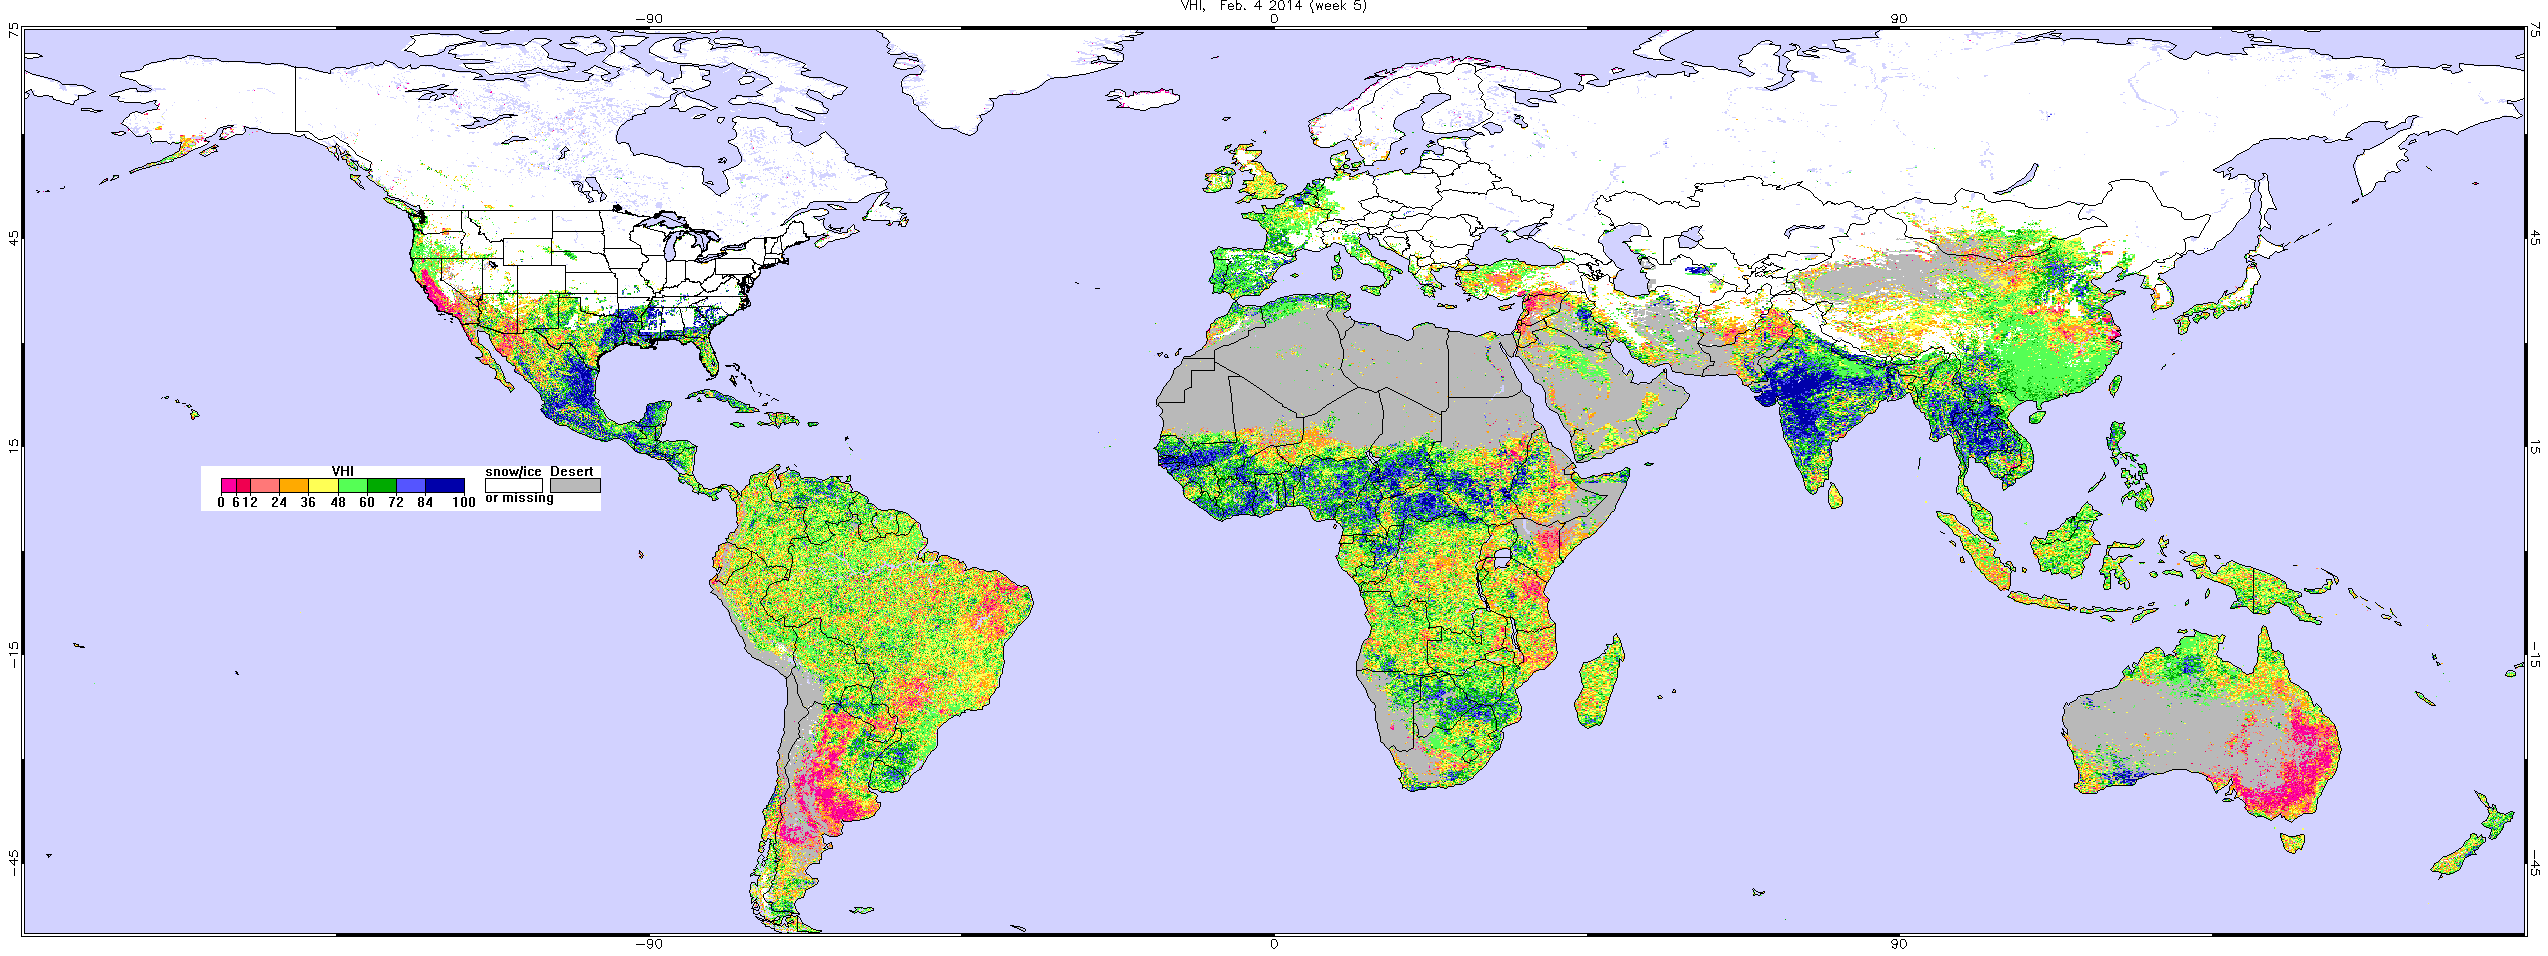 NOAA VHI (Vegetation Health Index)